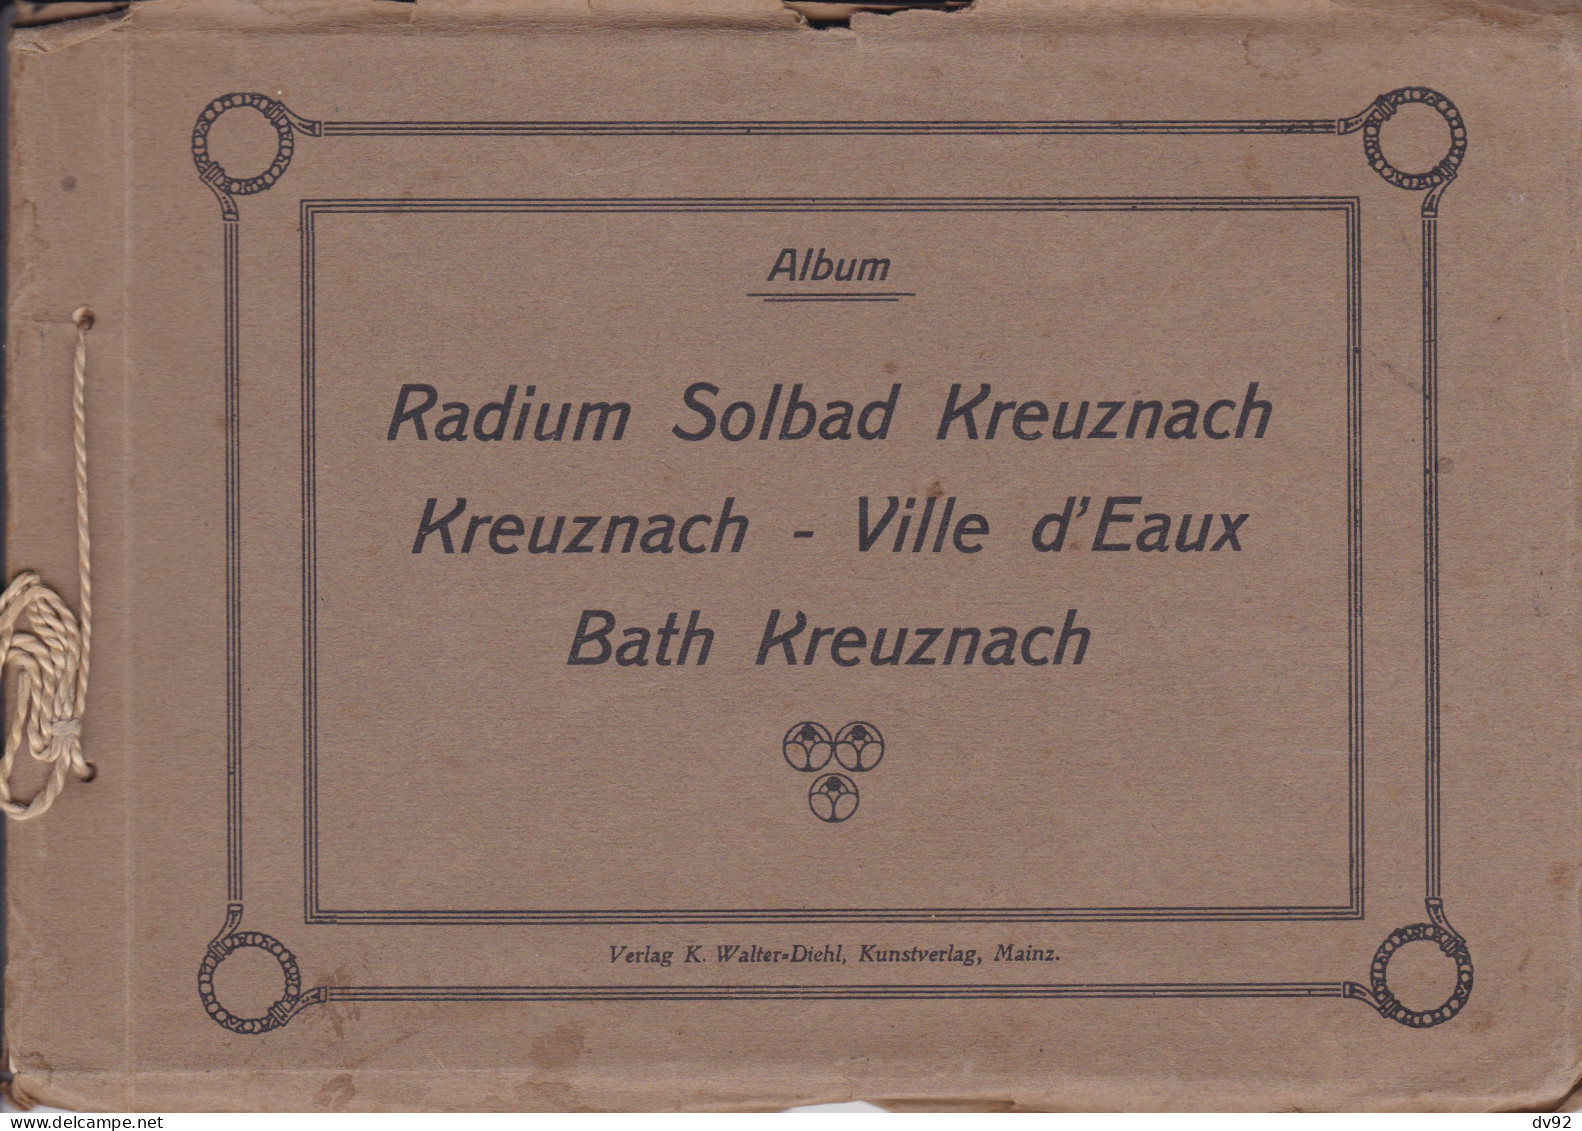 ALBUM RADIUM SOLBAD KREUZNACH - Bad Kreuznach